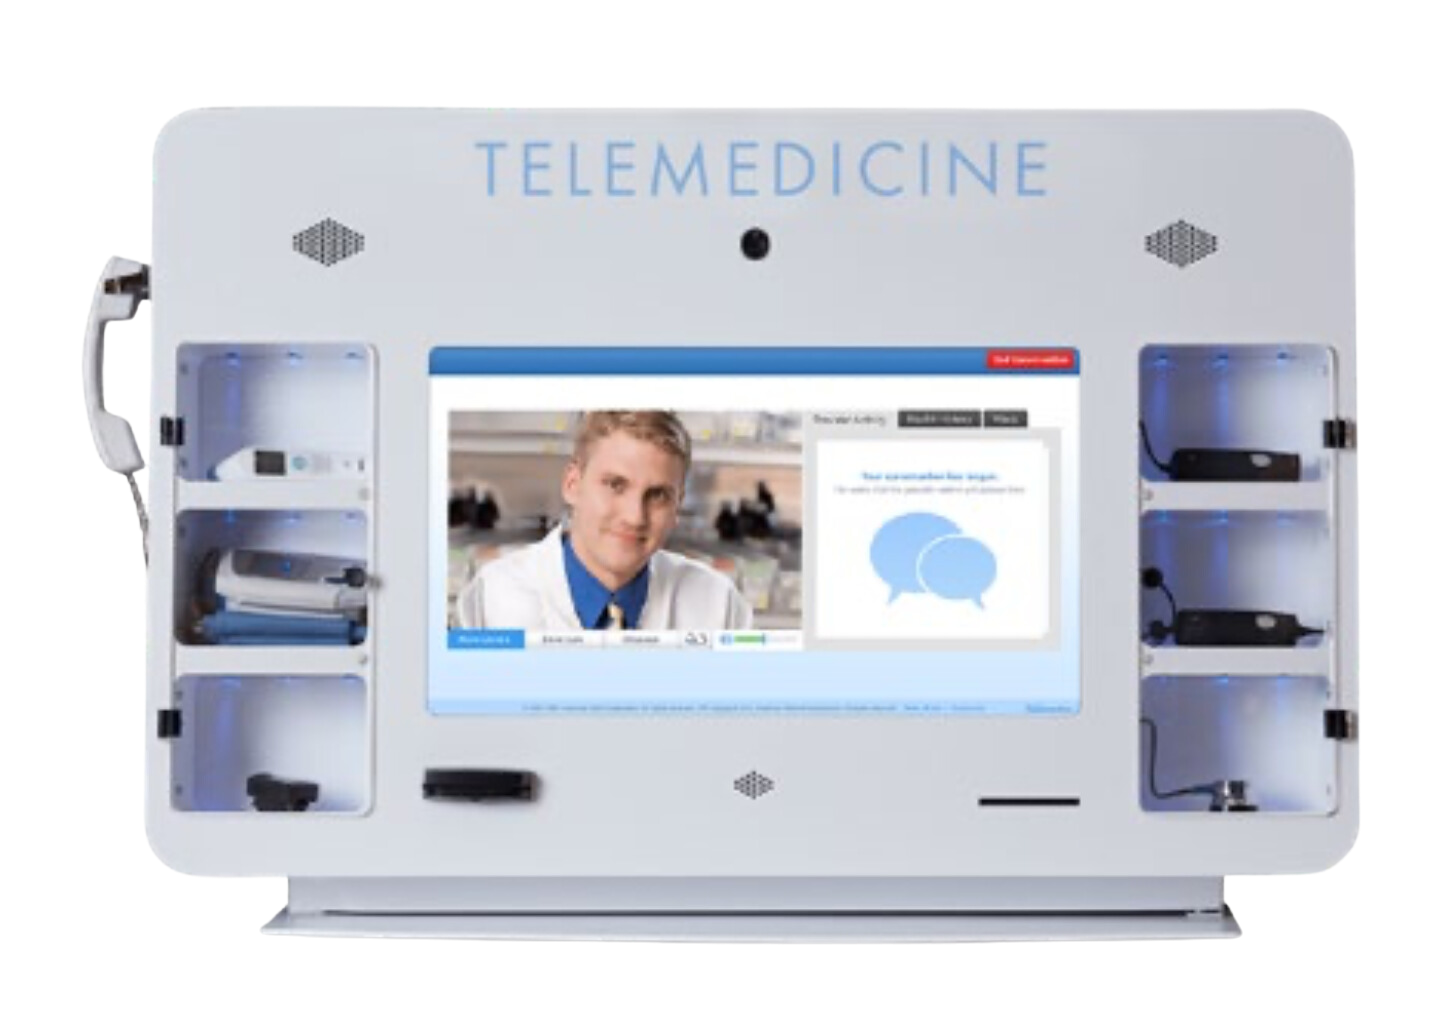 telemedicine and telehealth kiosk